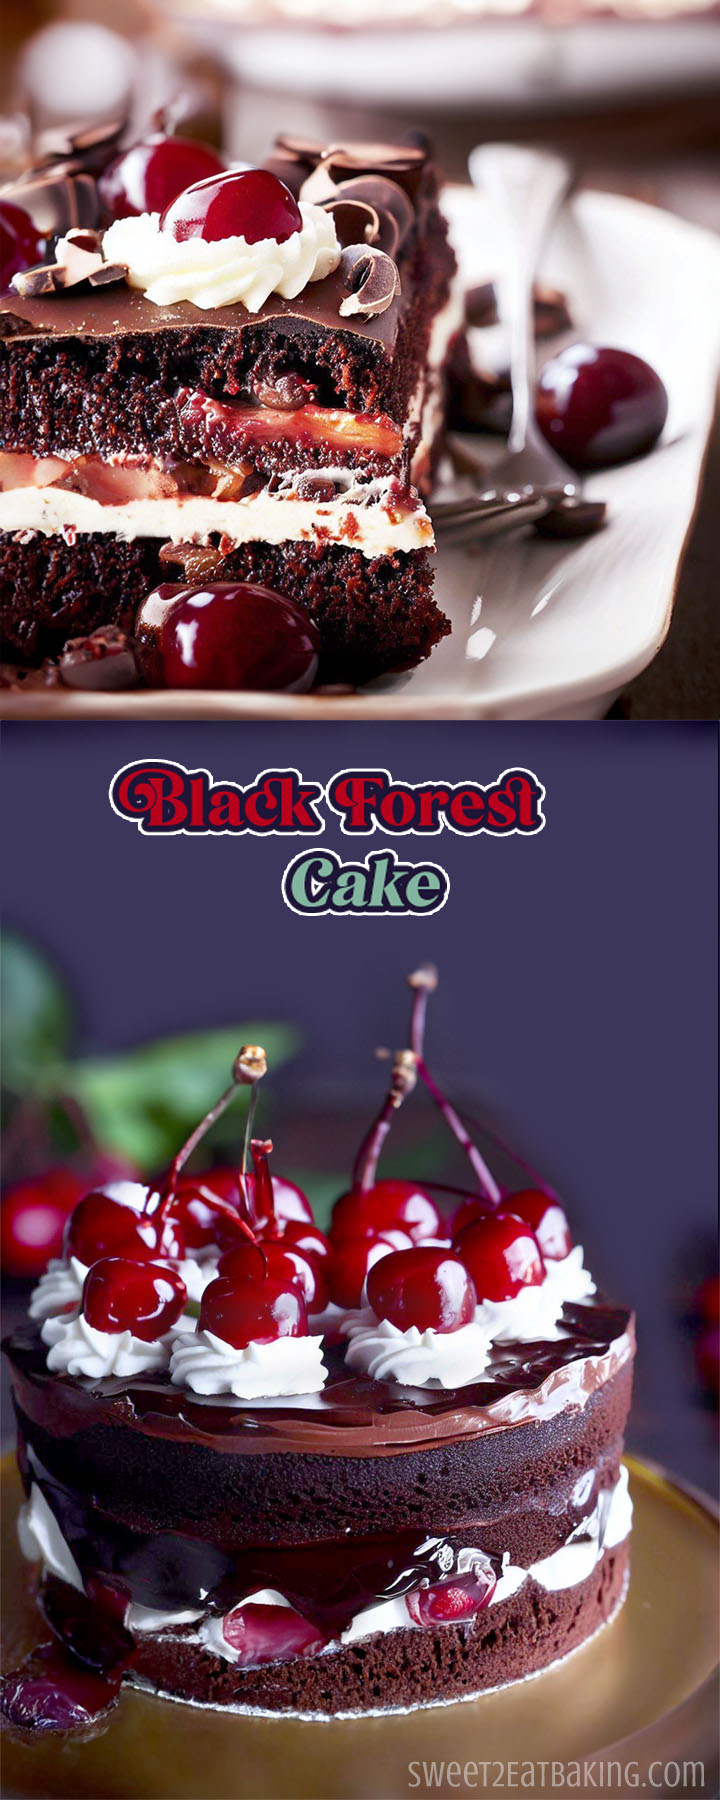 Black Forest Cake Recipe by Sweet2EatBaking.com